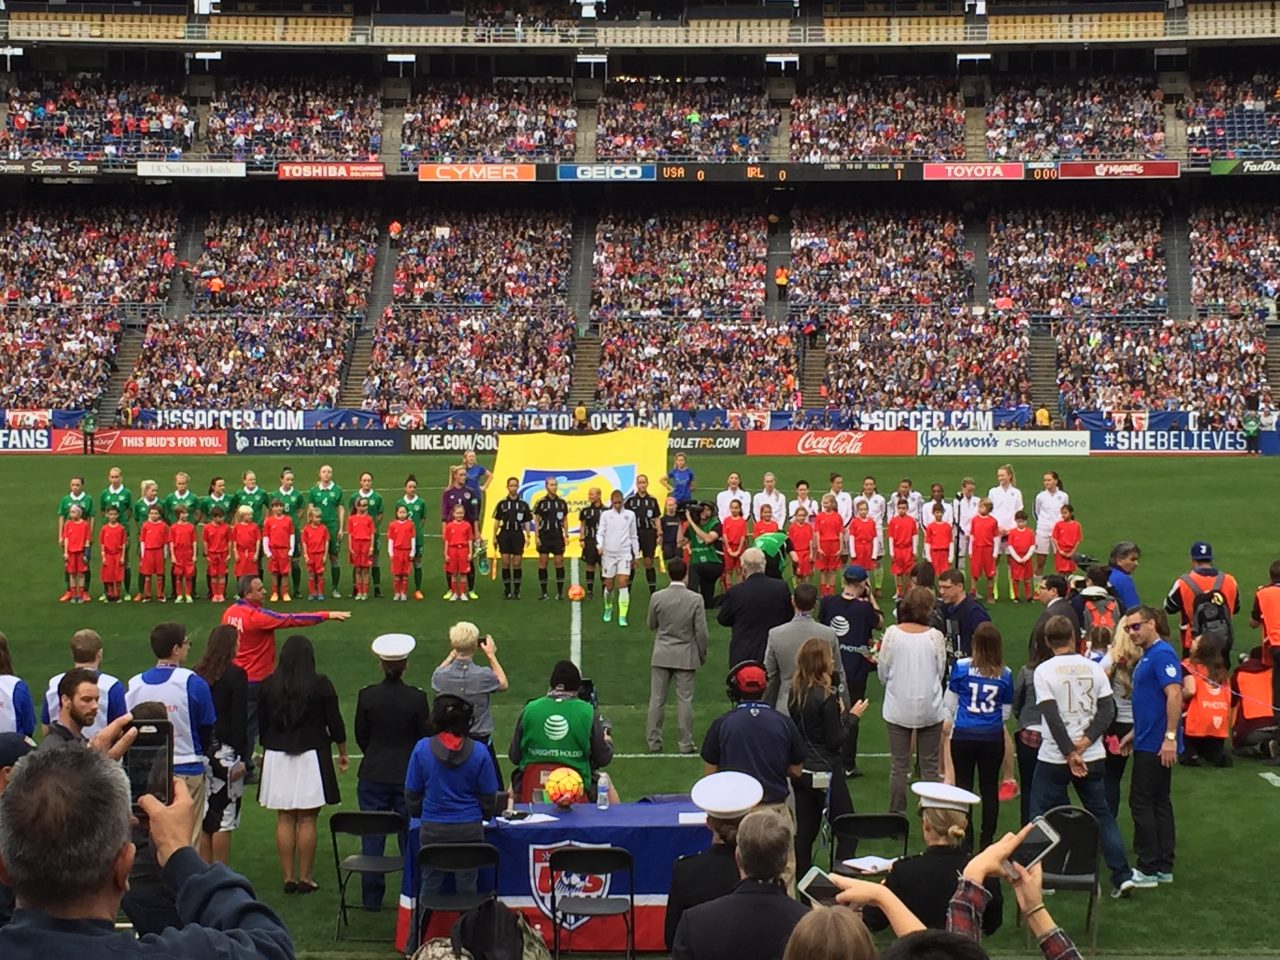 Sharks Accompany USA and Ireland Teams for National Anthem